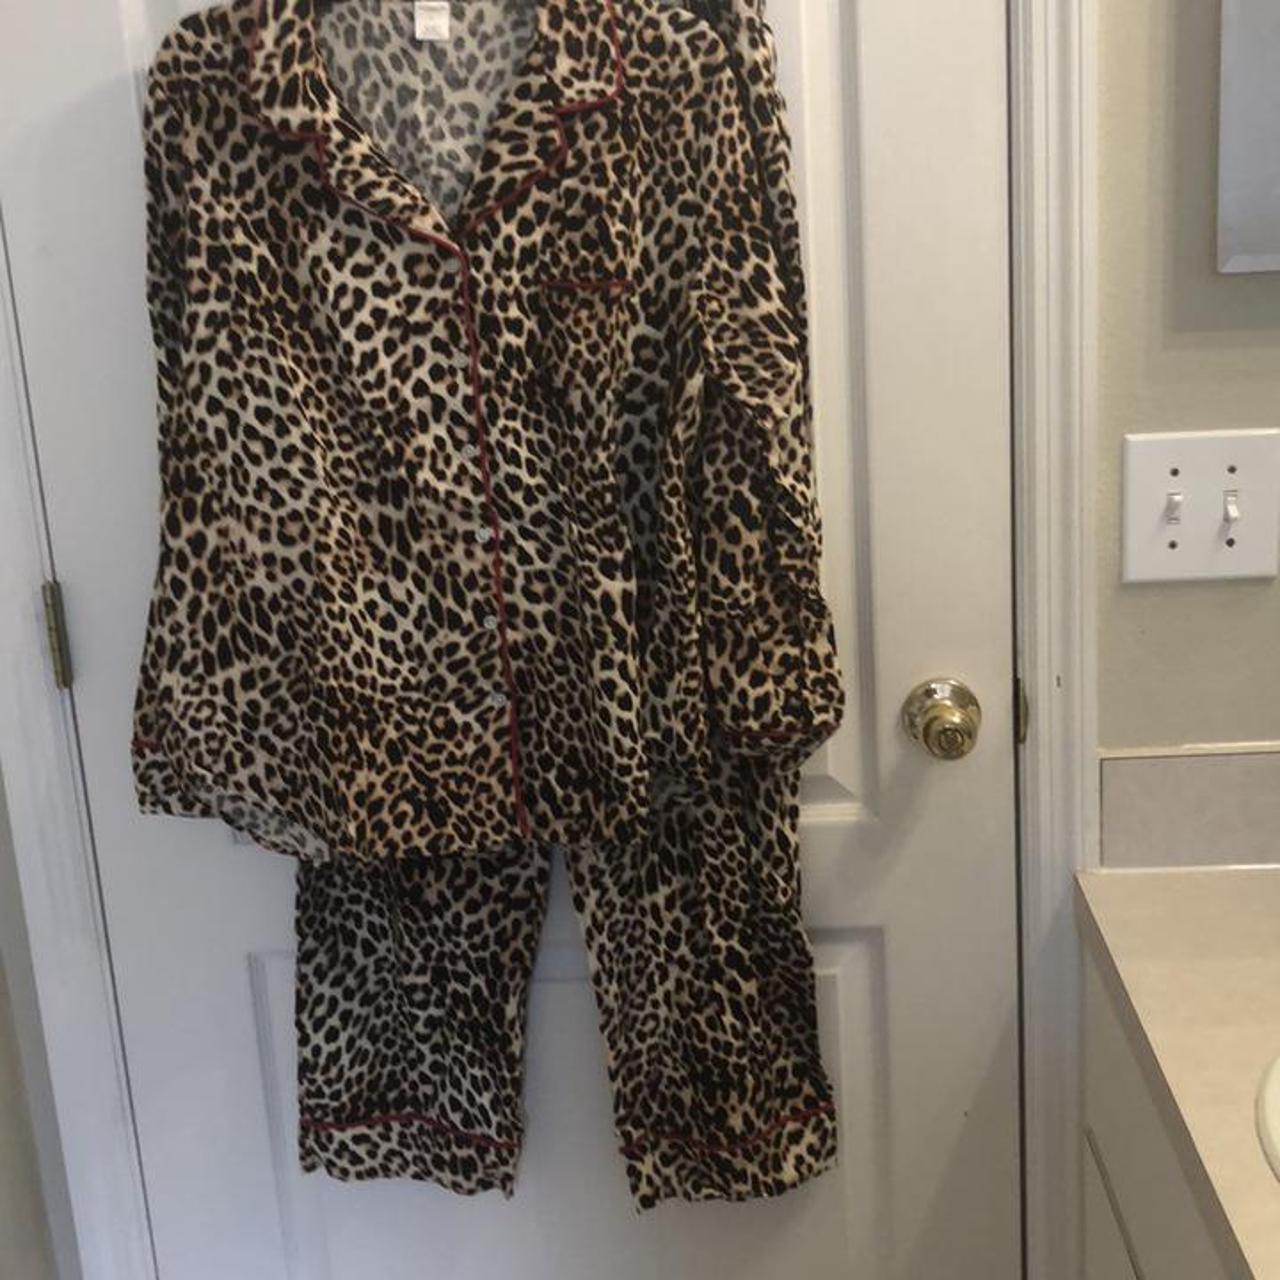 Liz Claiborne Leopard Print Pajamas Only worn once,... - Depop